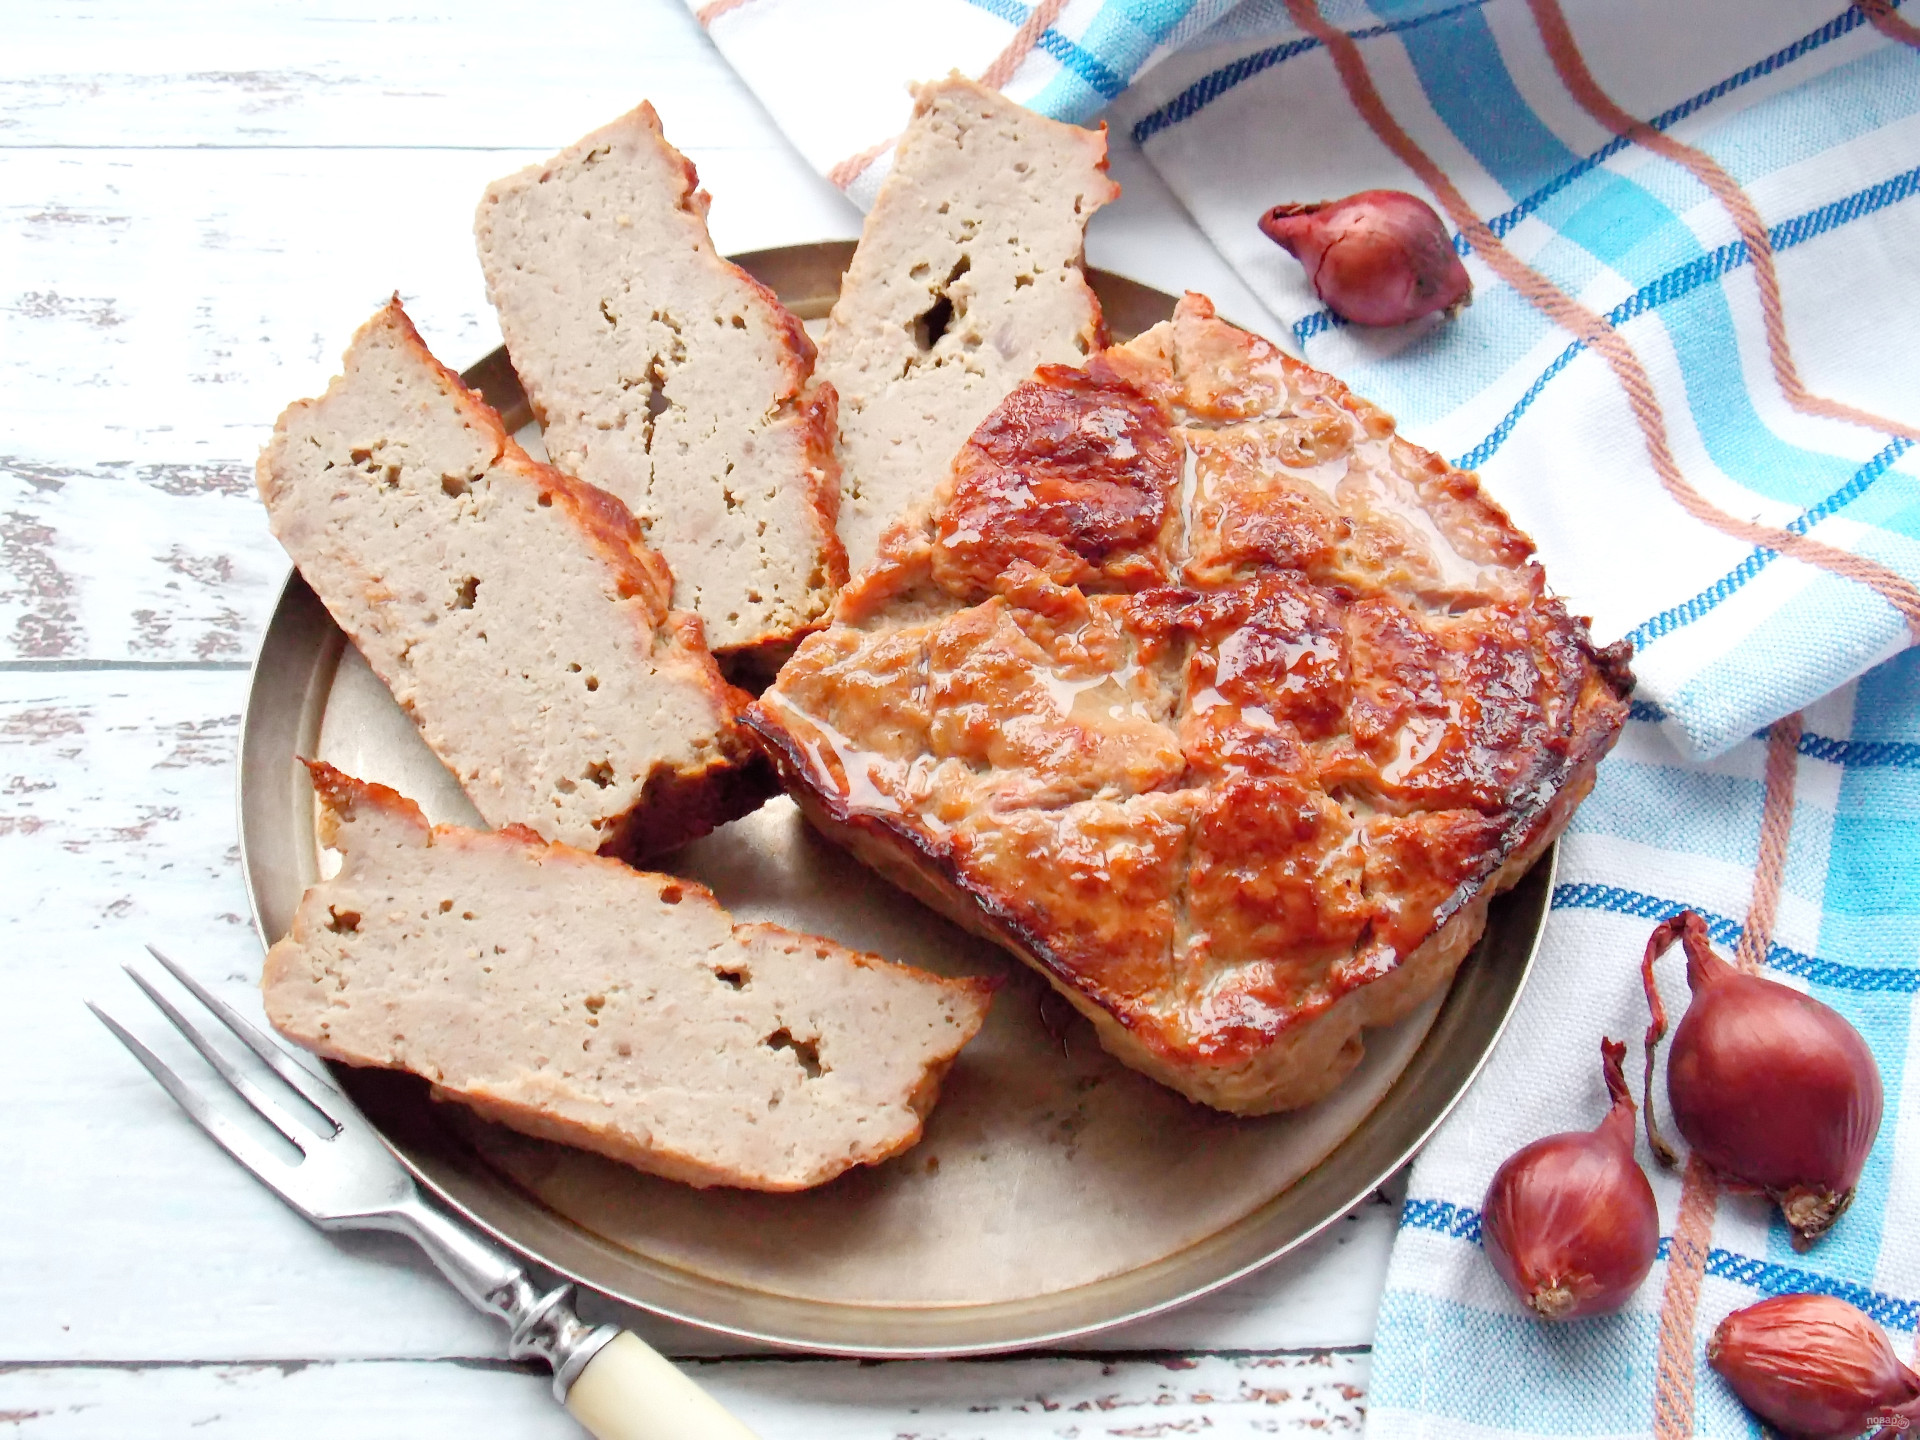 Мясо хлеб большой. Баварский леберкезе. Леберкезе мясной хлеб. Леберкезе фото. Леберкезе Германия.